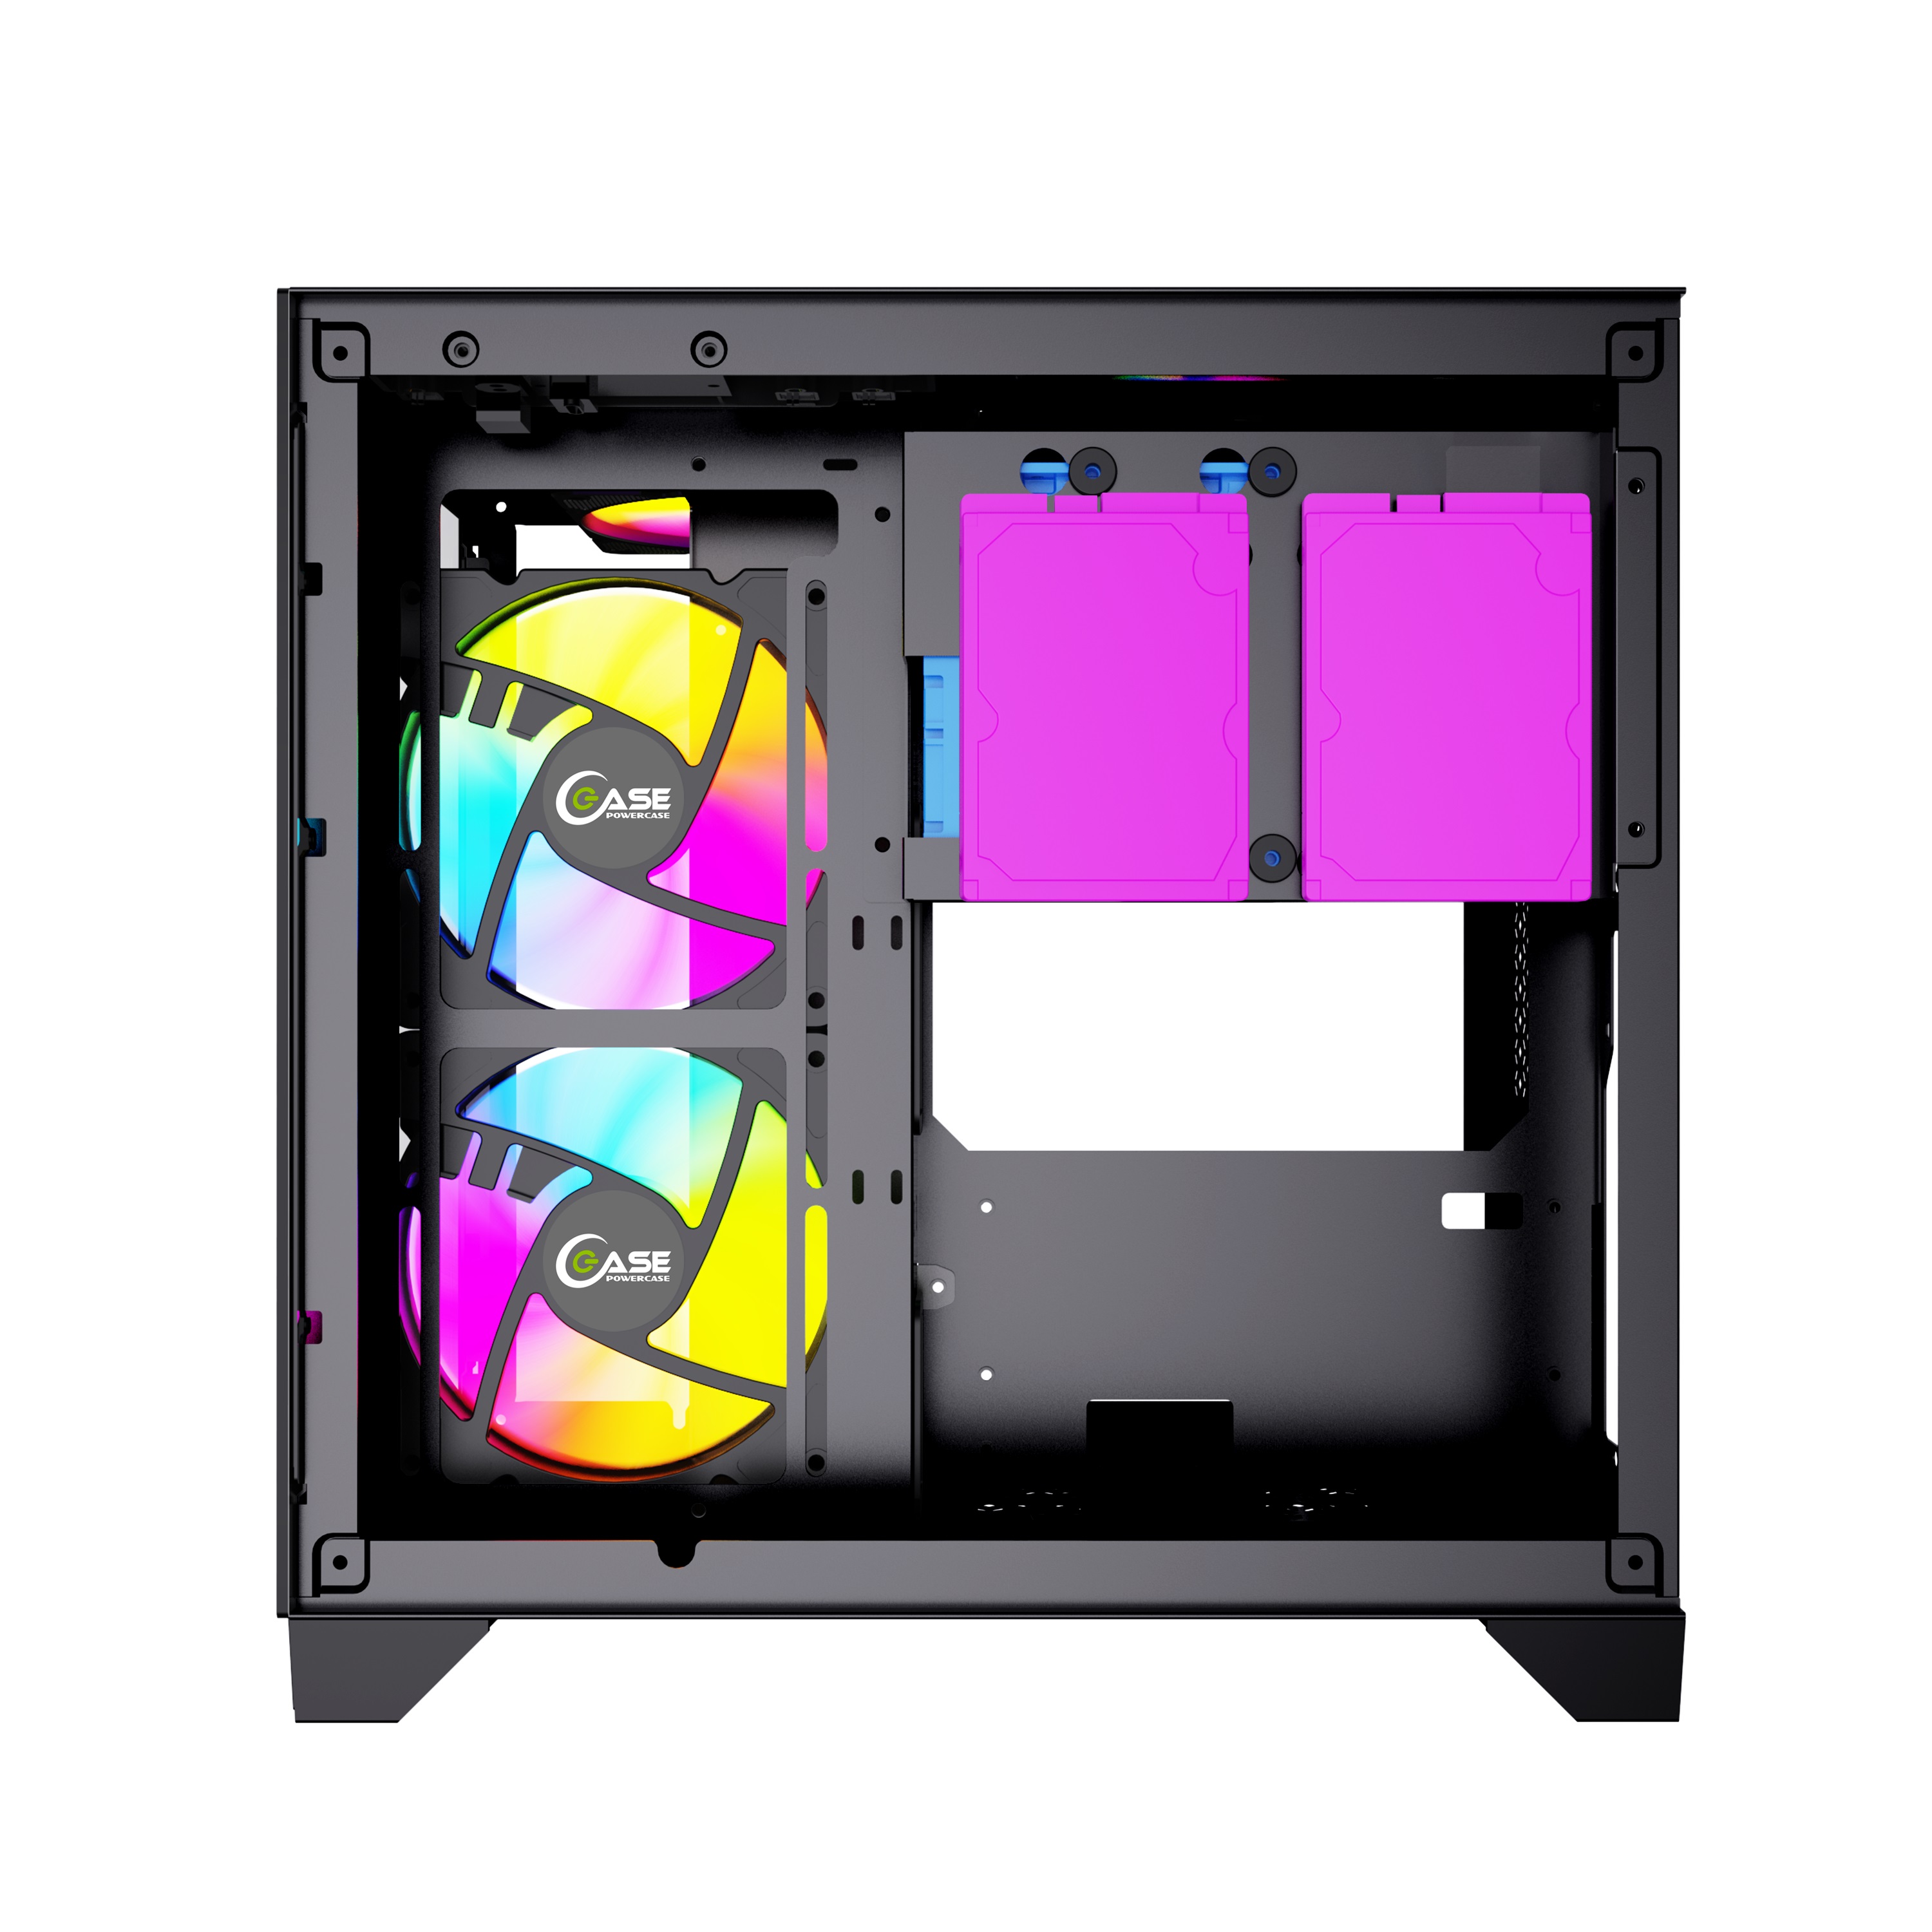 Корпус Powercase Vision Micro, Black, Tempered Glass, 4х 120mm 5-color fan, чёрный, mATX  (CVBM-L4)